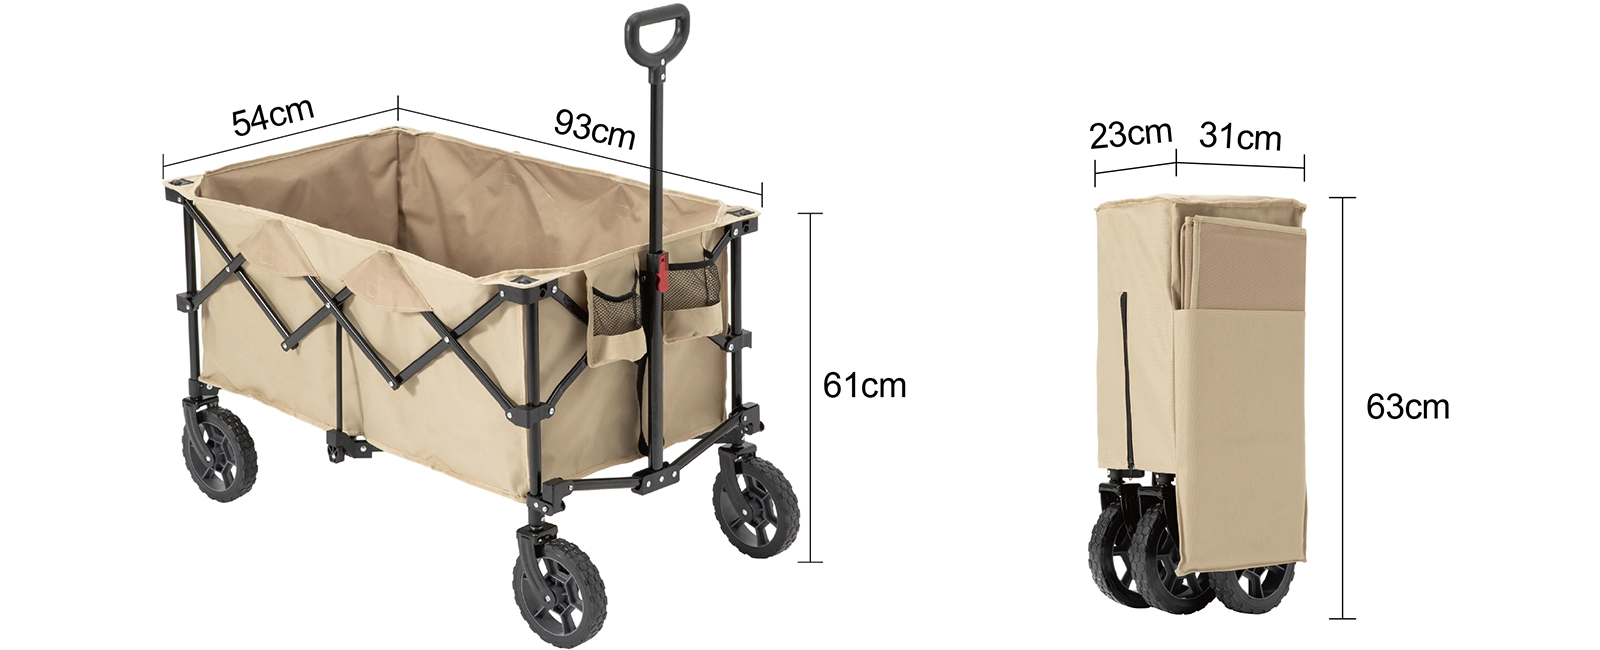 details of Outdoor Garden Folding Cart Camping Wagon